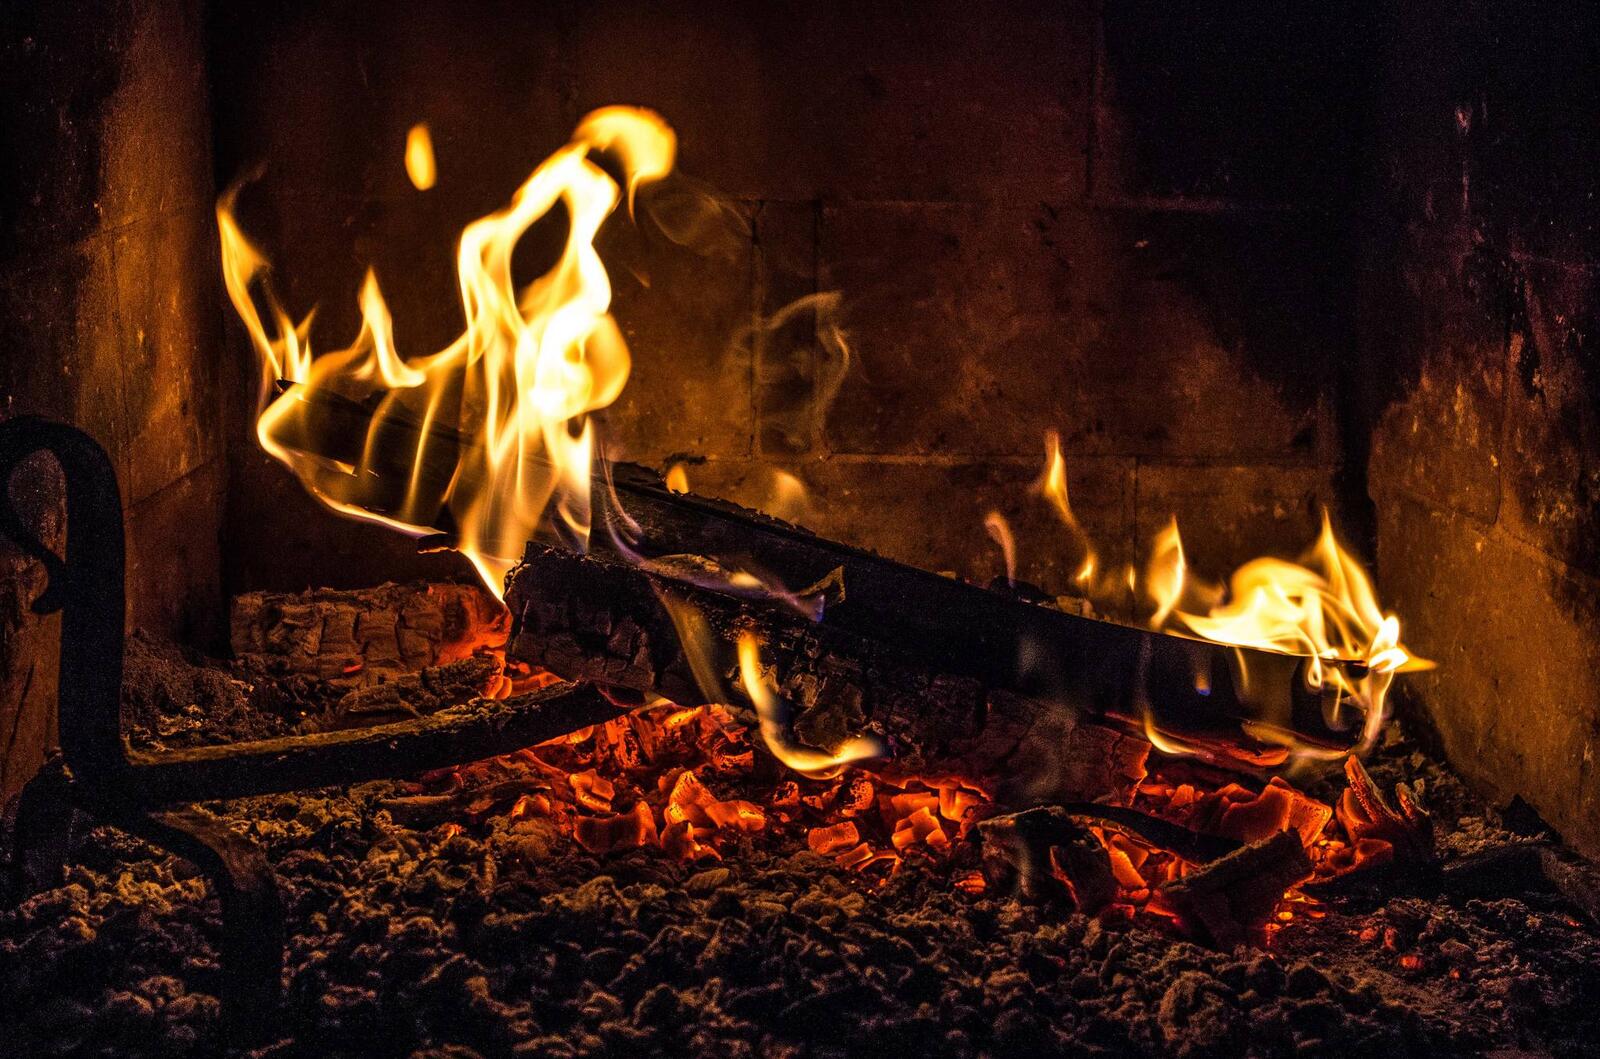 Wallpapers stove firewood bonfire on the desktop